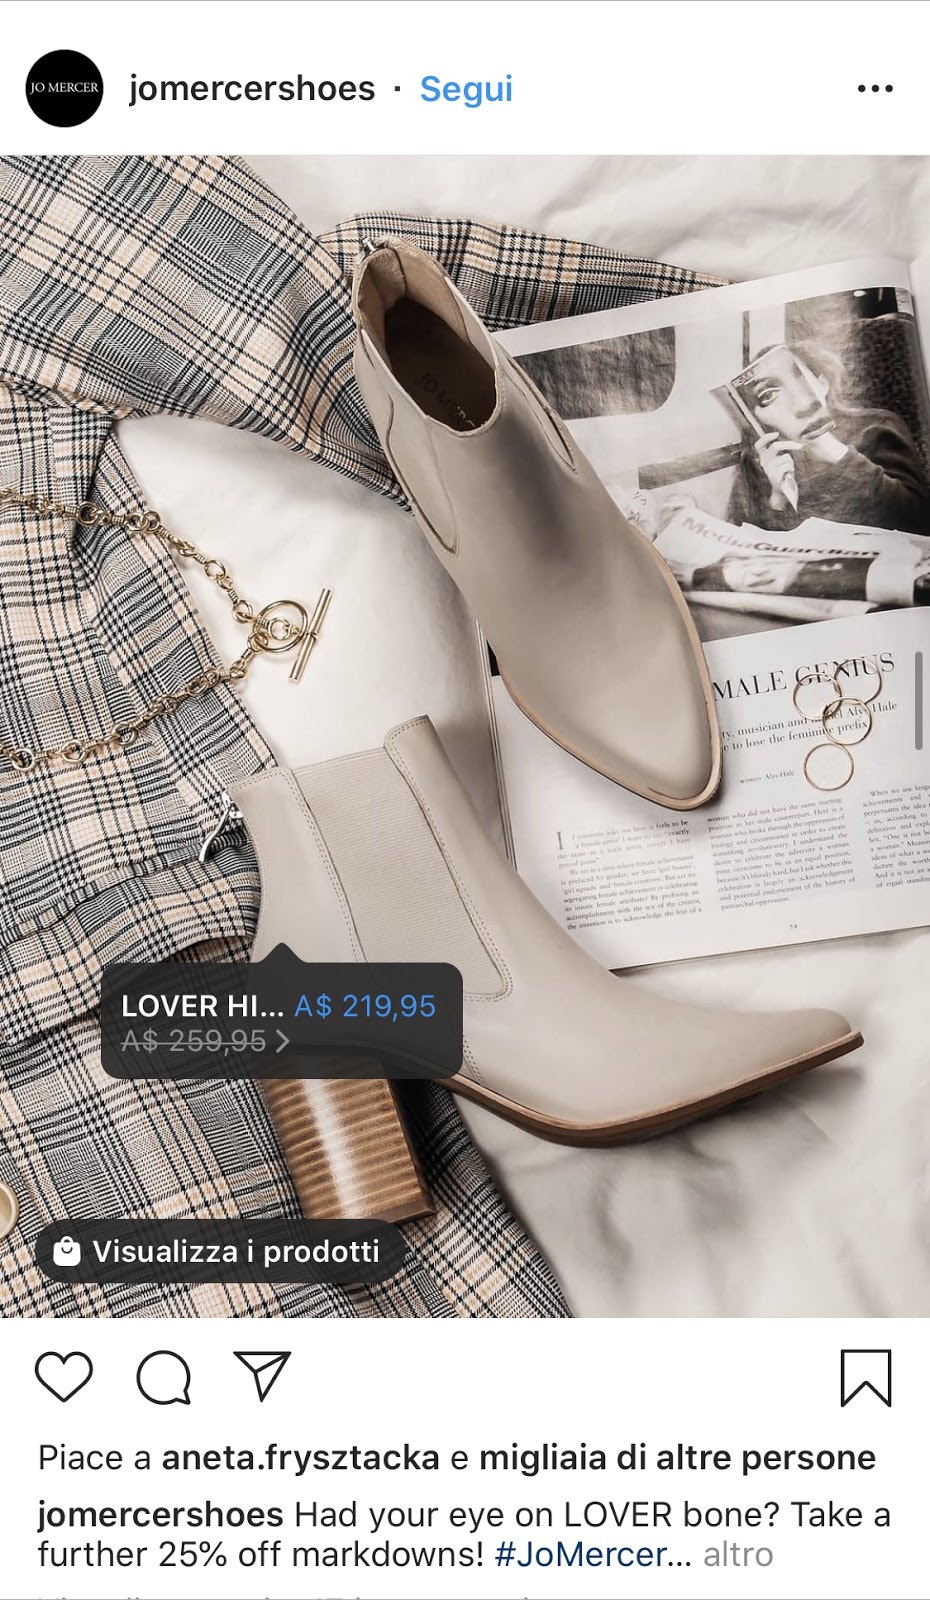 Instagram ads: shopping